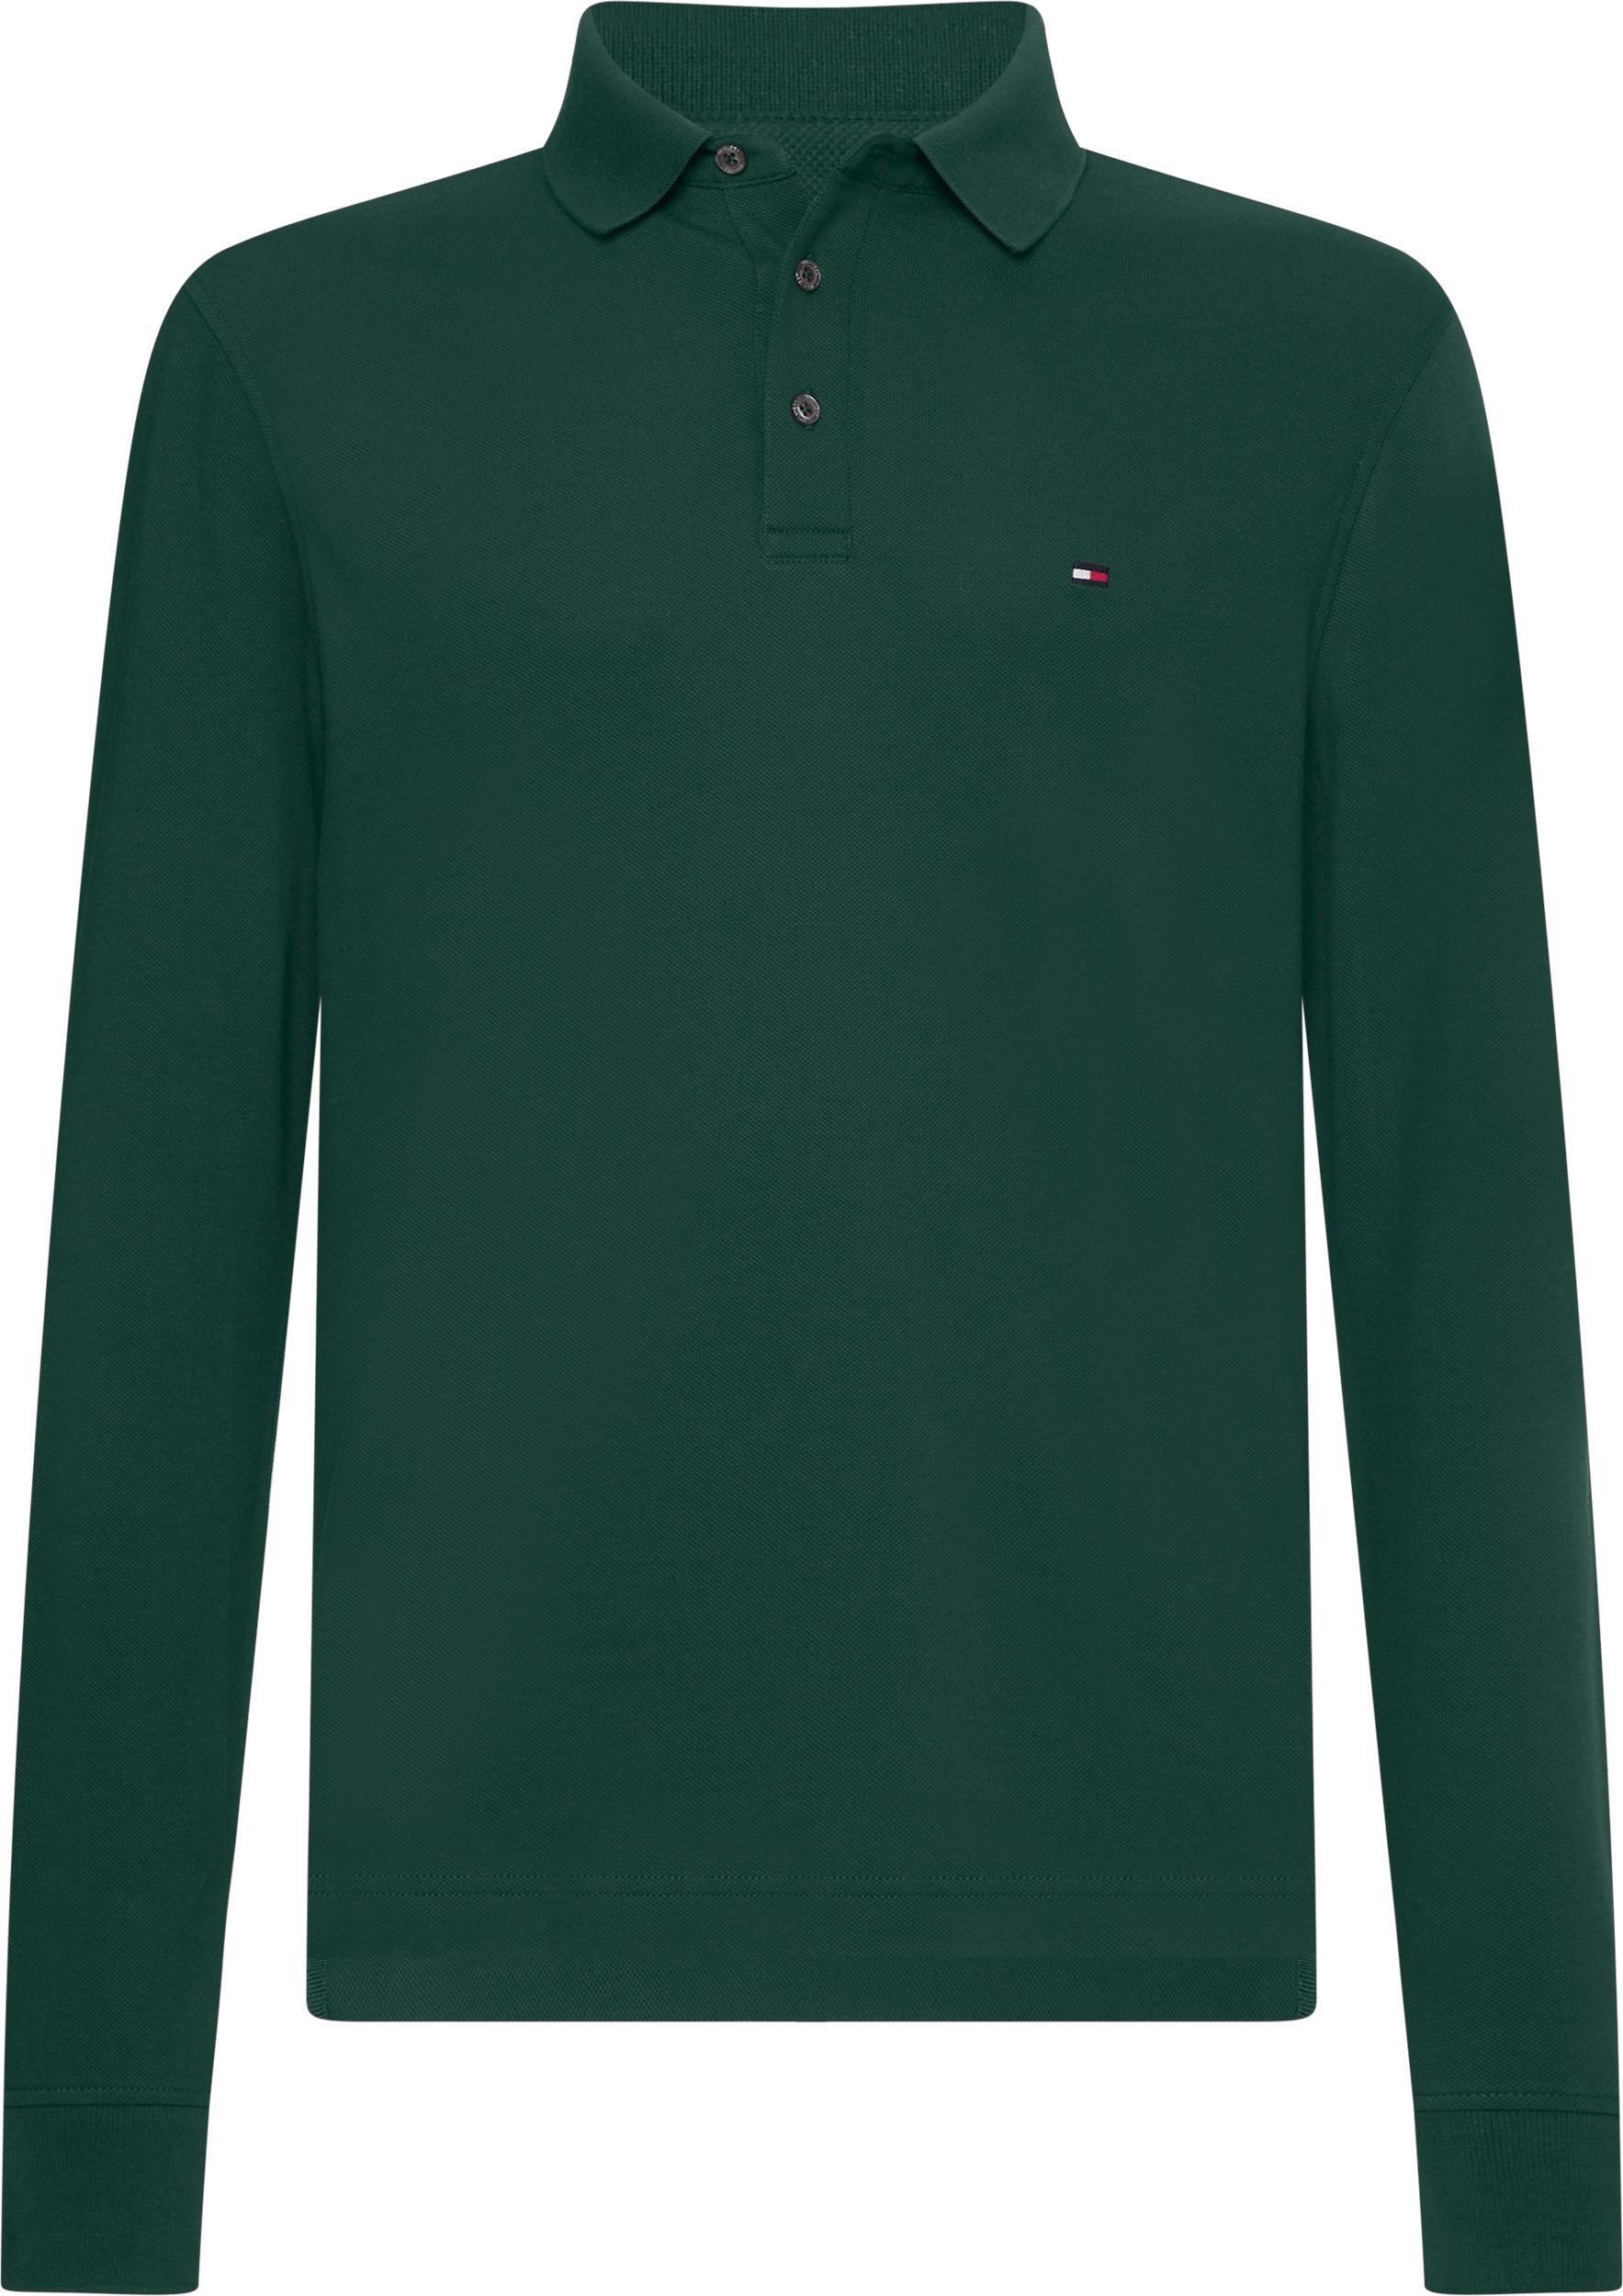 Tommy Hilfiger Menswear Polo LM Groen 083039-001-L